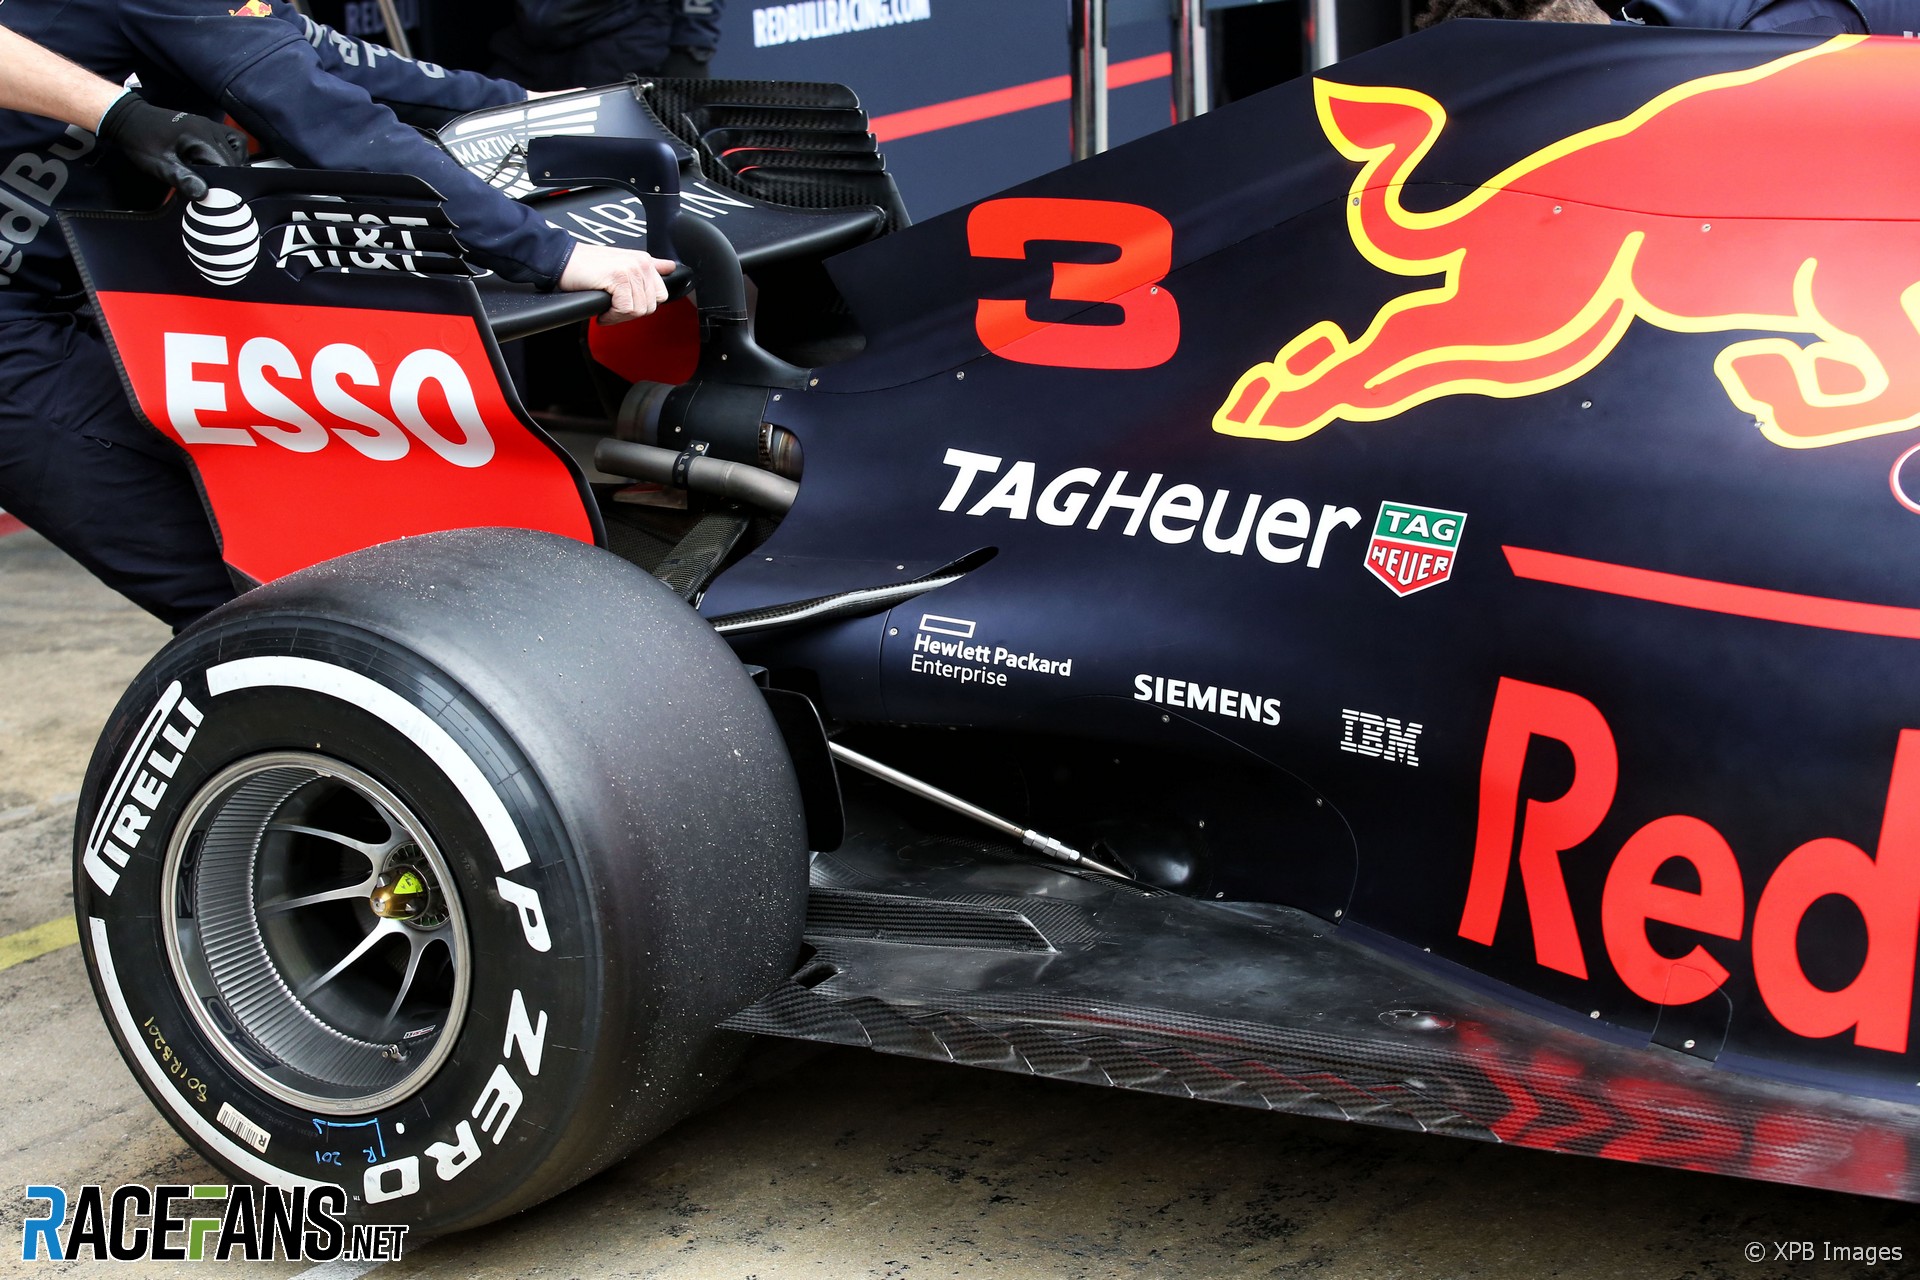 Red Bull RB14 rear suspension, Circuit de Catalunya, 2018